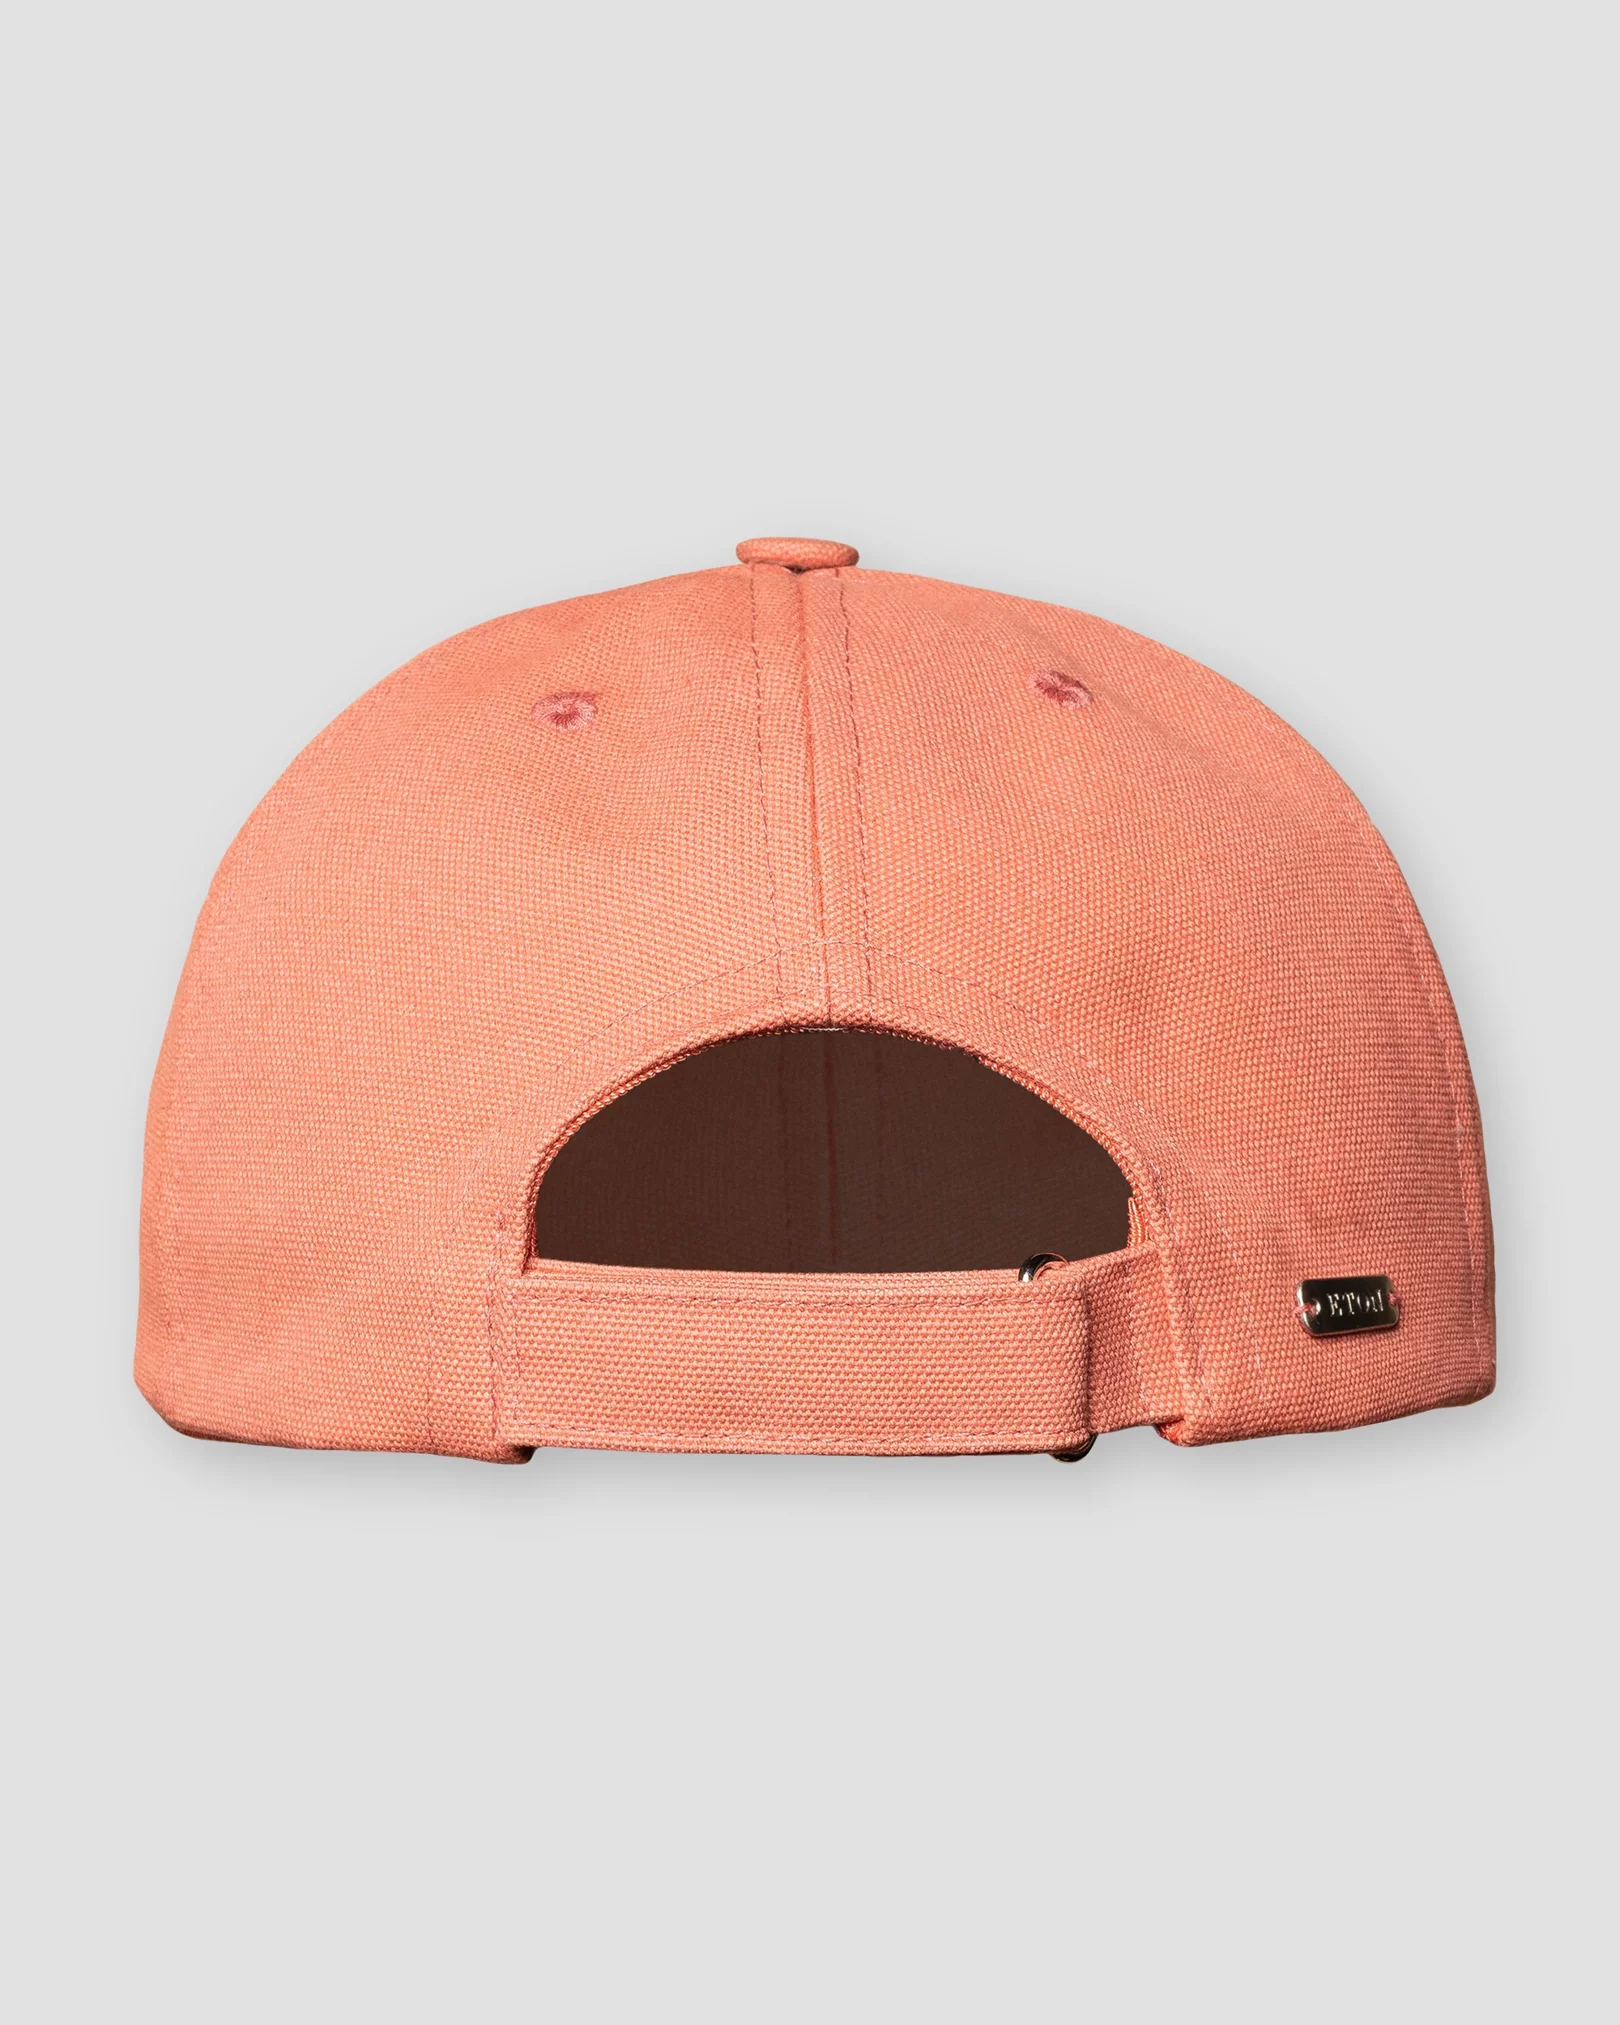 Eton - light orange cap